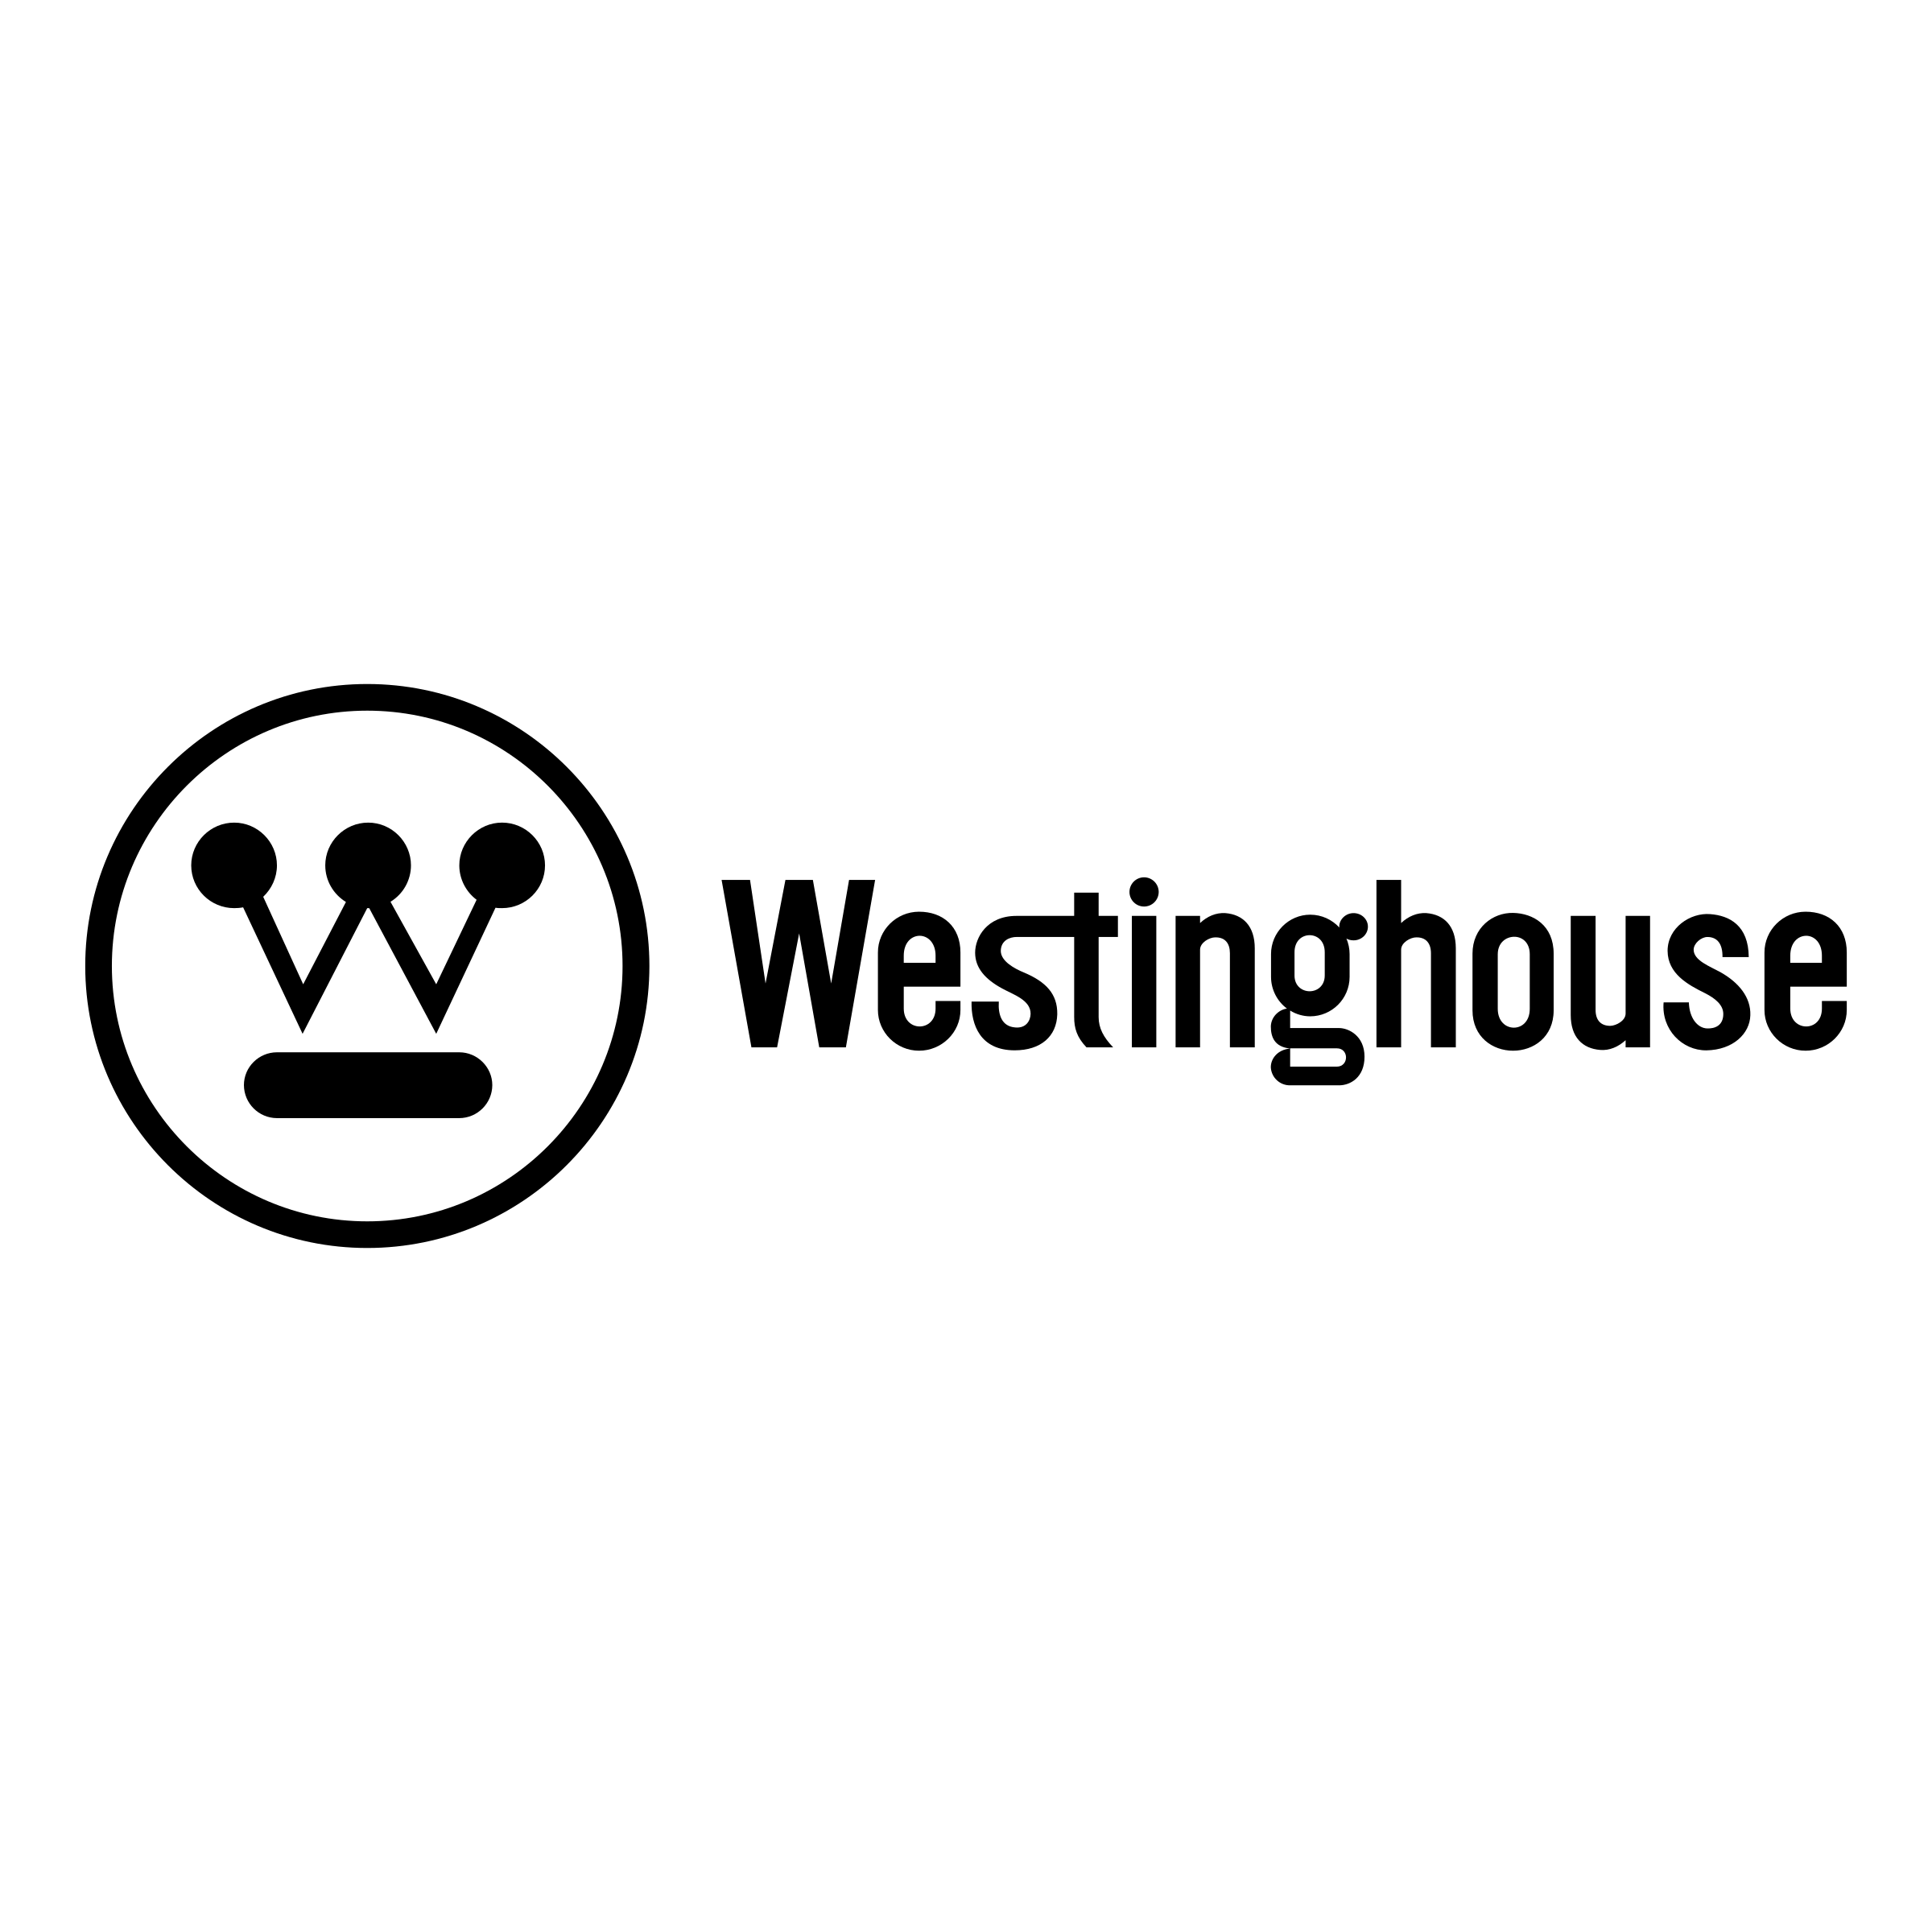 Westinghouse Logo - Westinghouse Logo PNG Transparent & SVG Vector - Freebie Supply